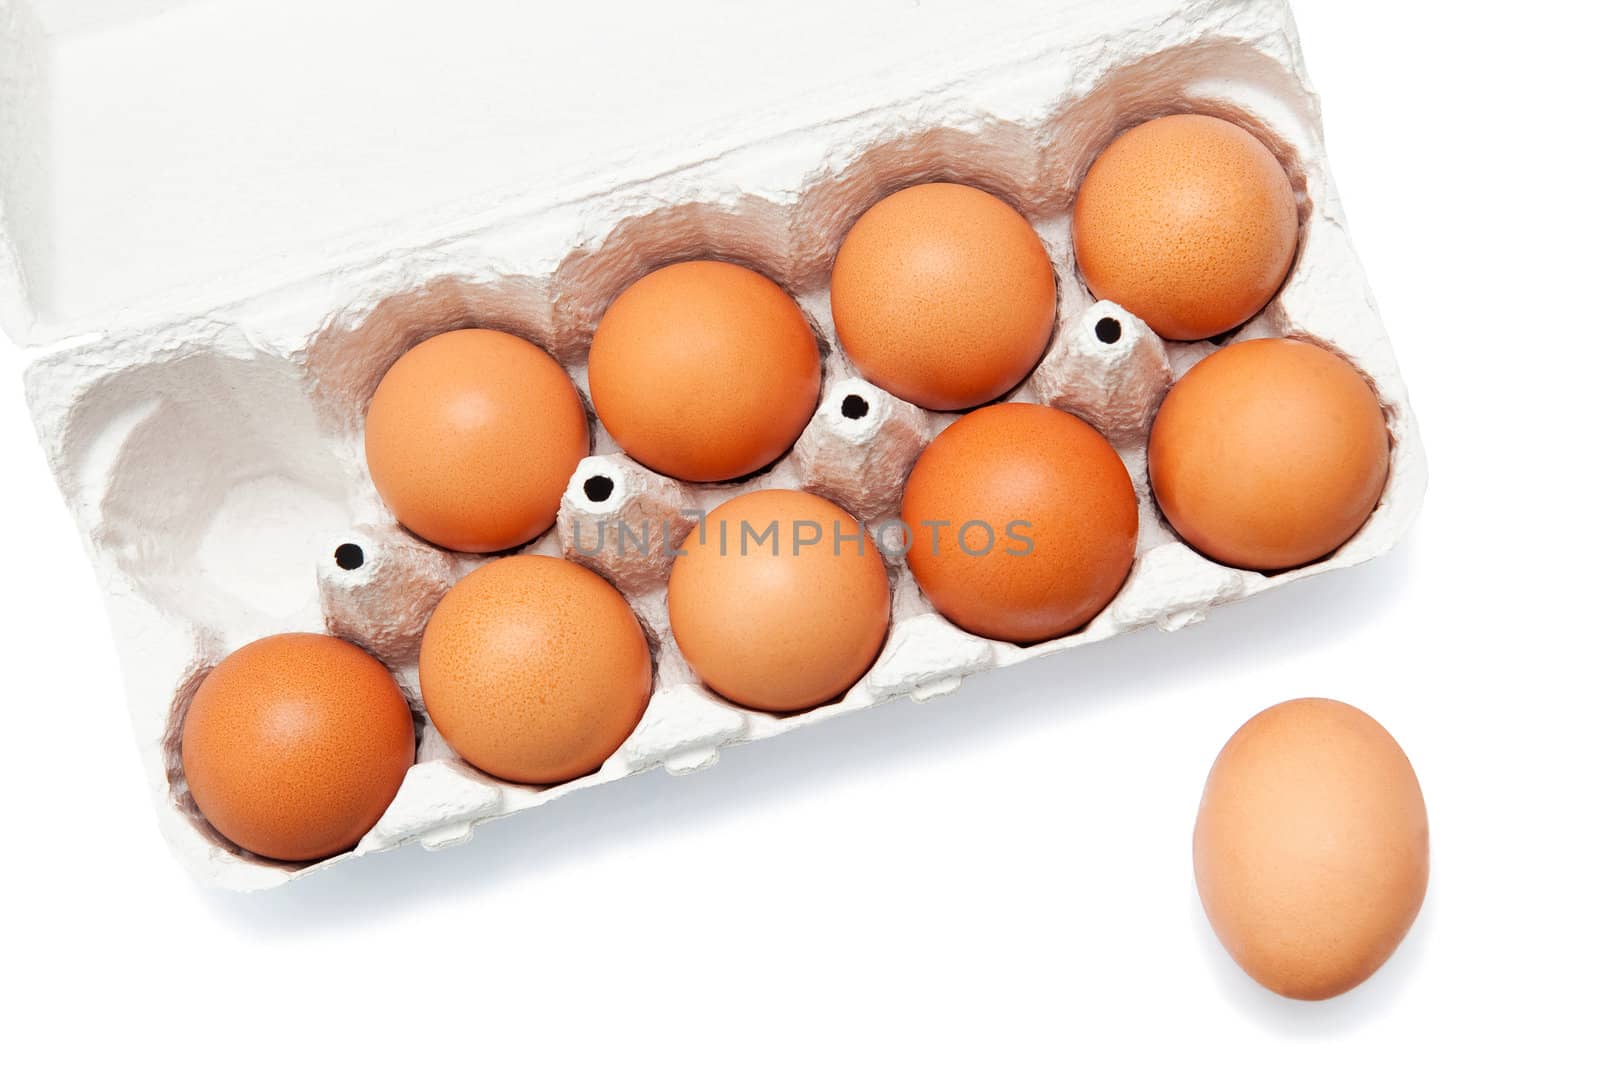 Eggs by Yaurinko